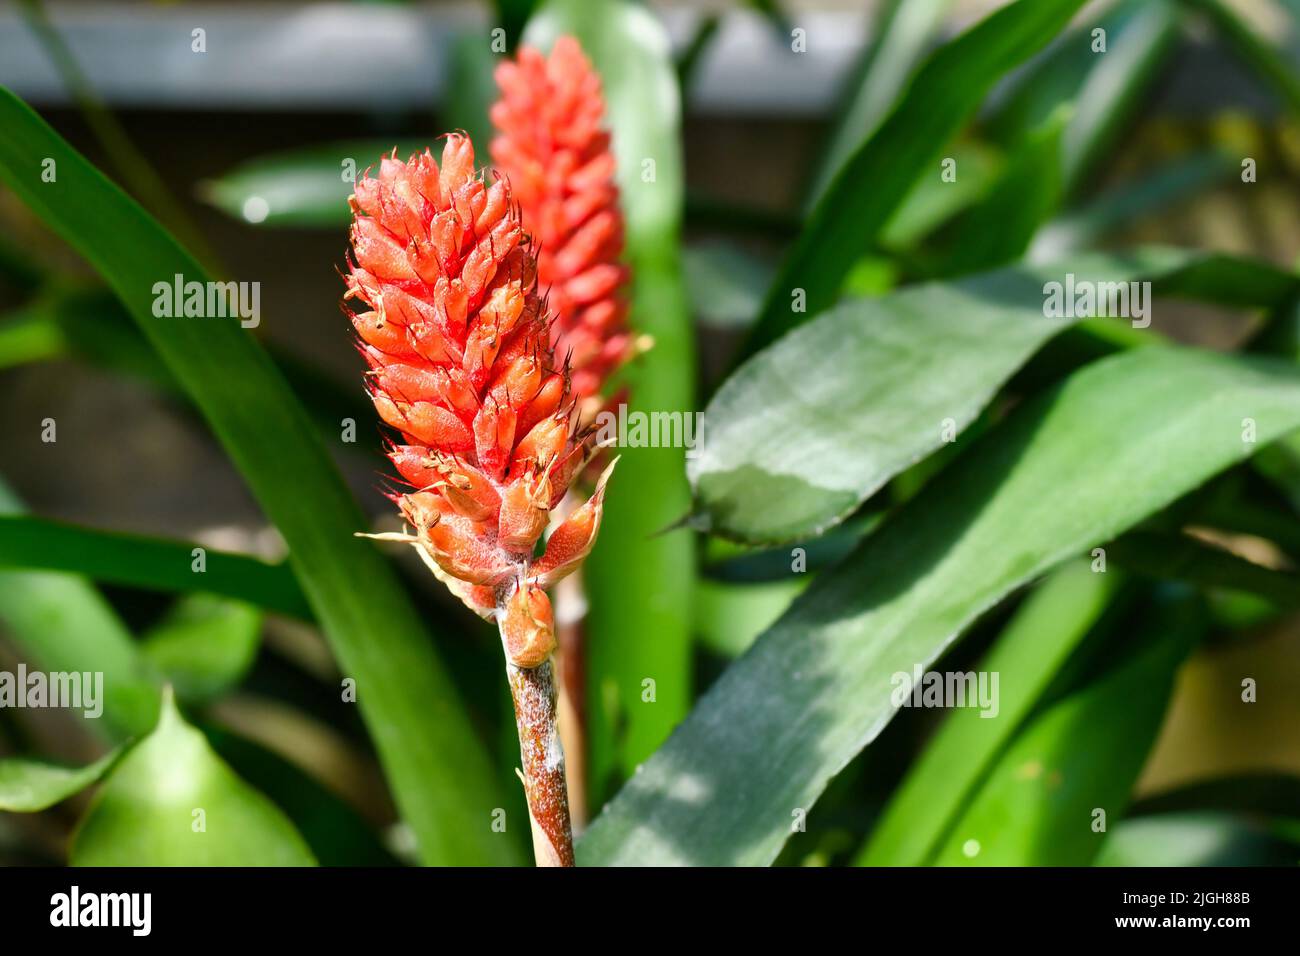 Leuchtend rote Blume der Pflanze 'Aechmea Cylindrata' Stockfoto